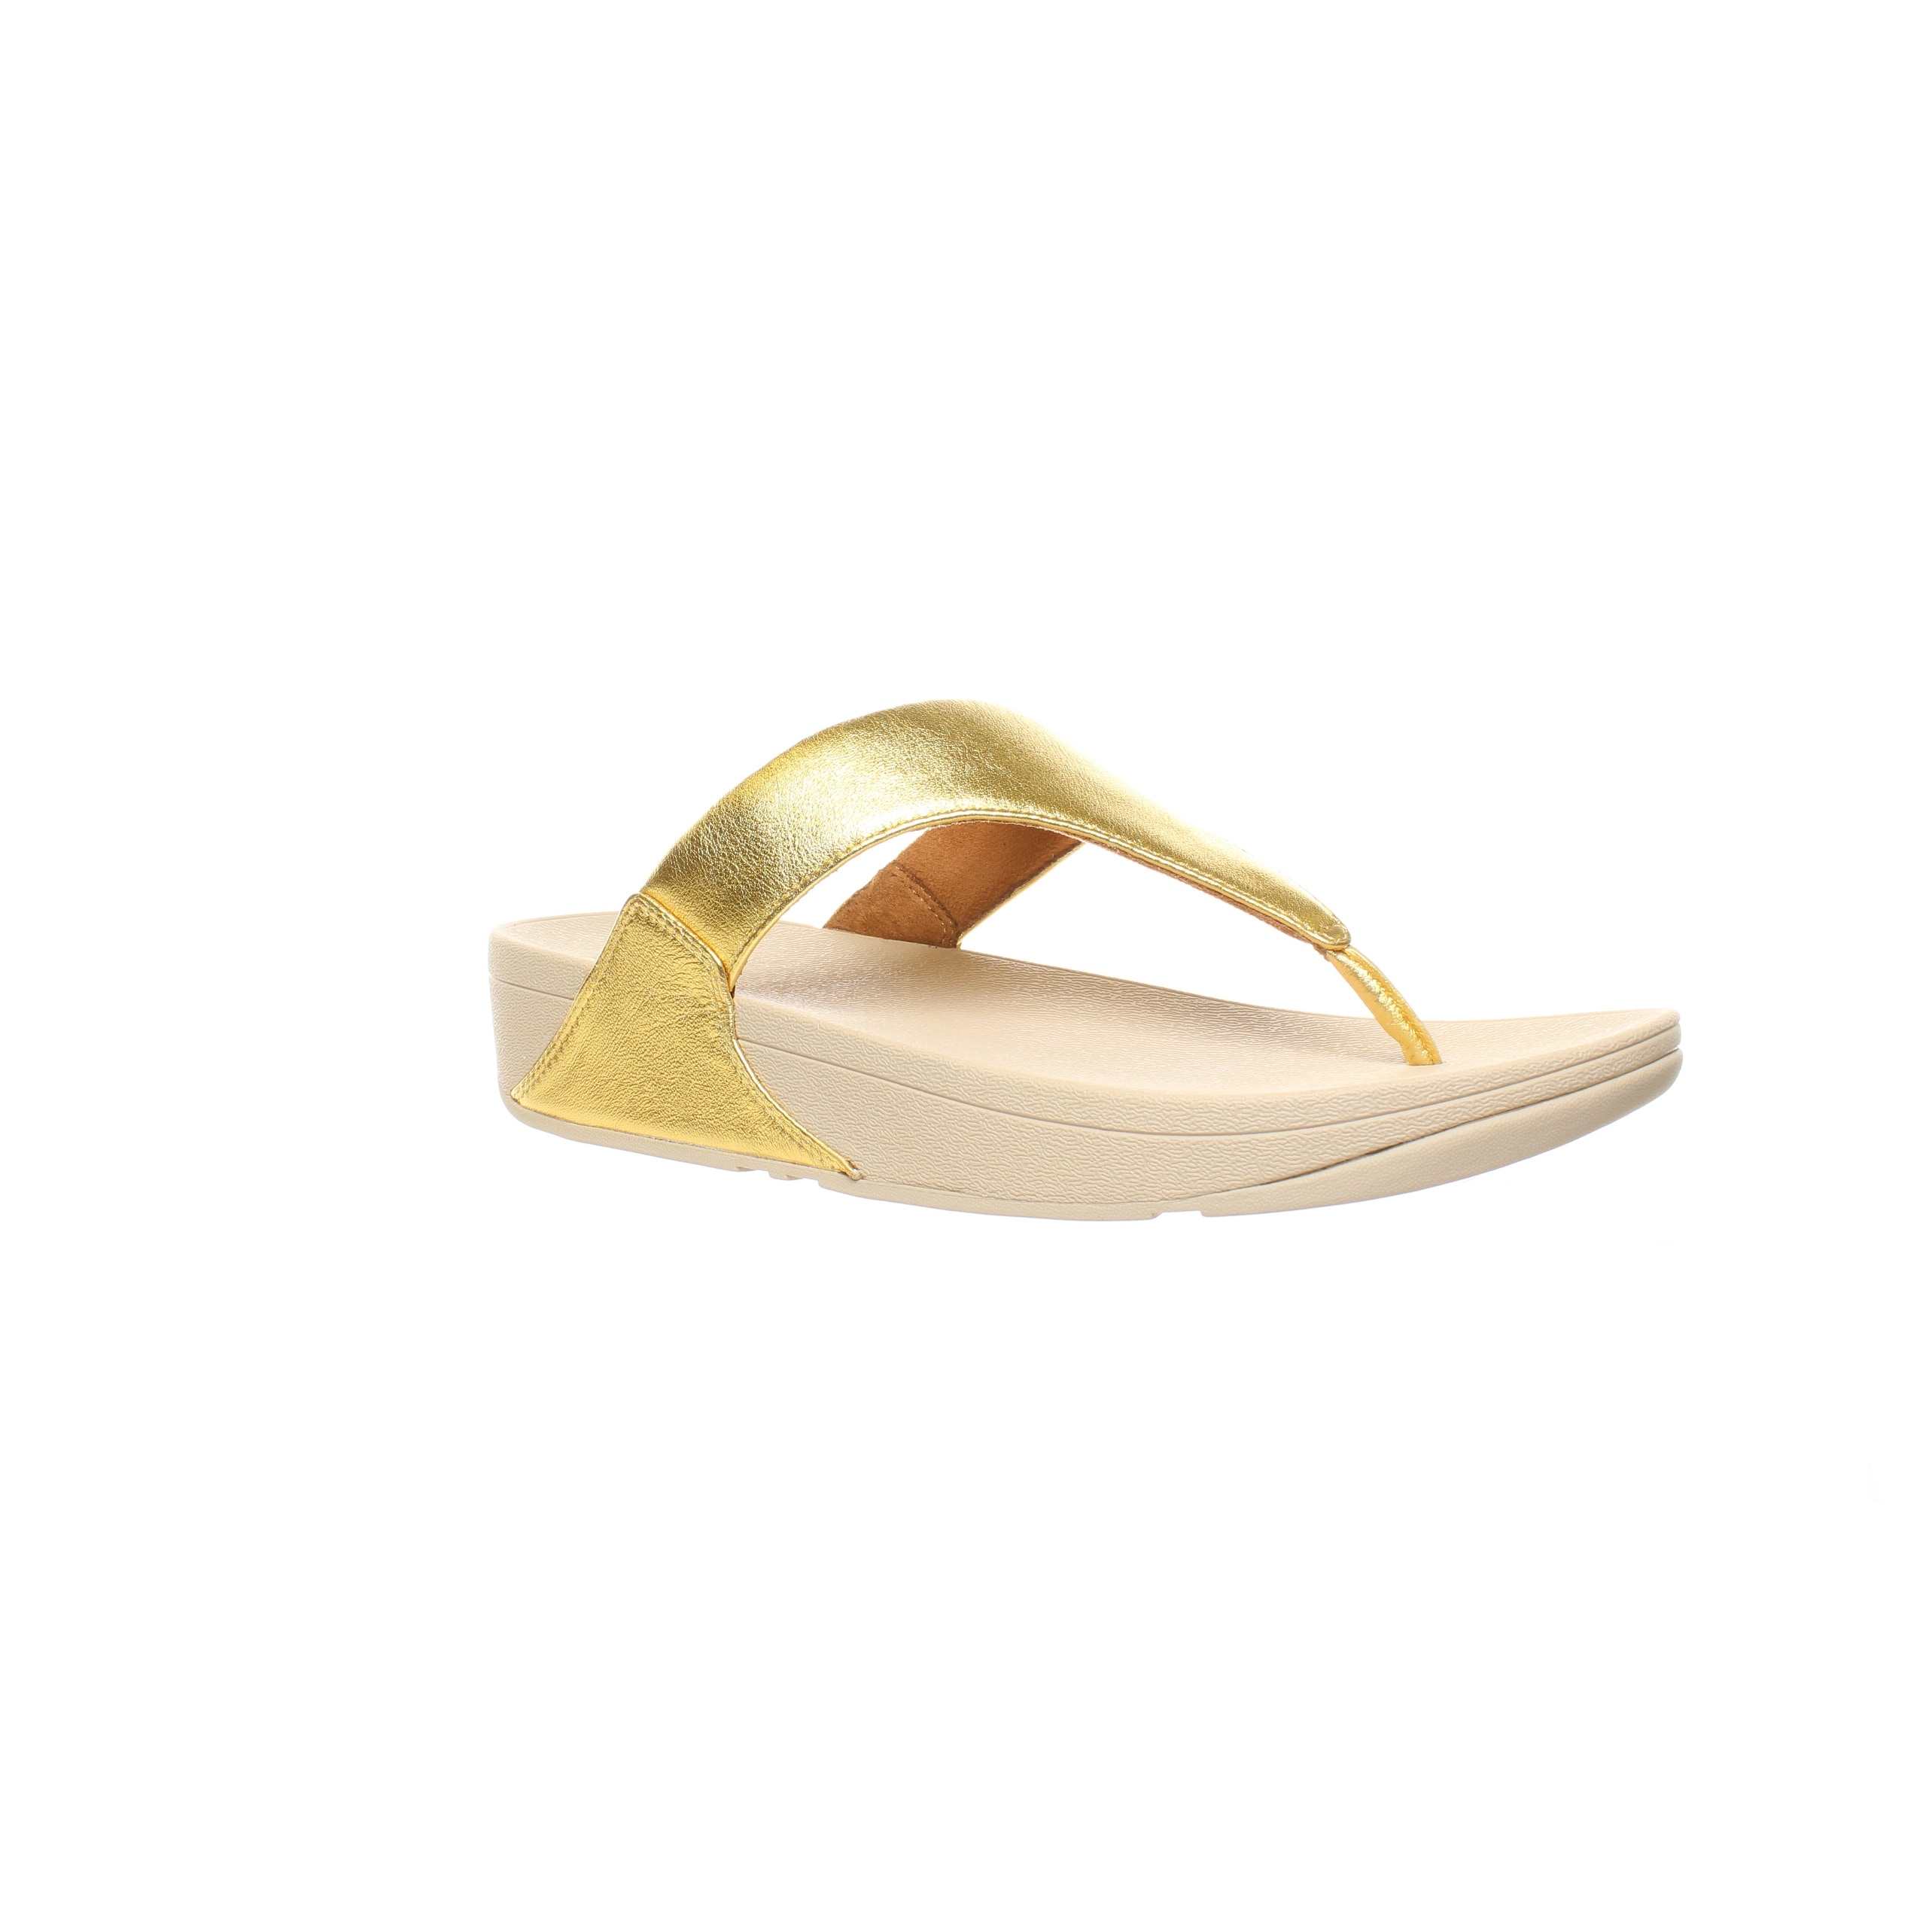 gold sandals size 11